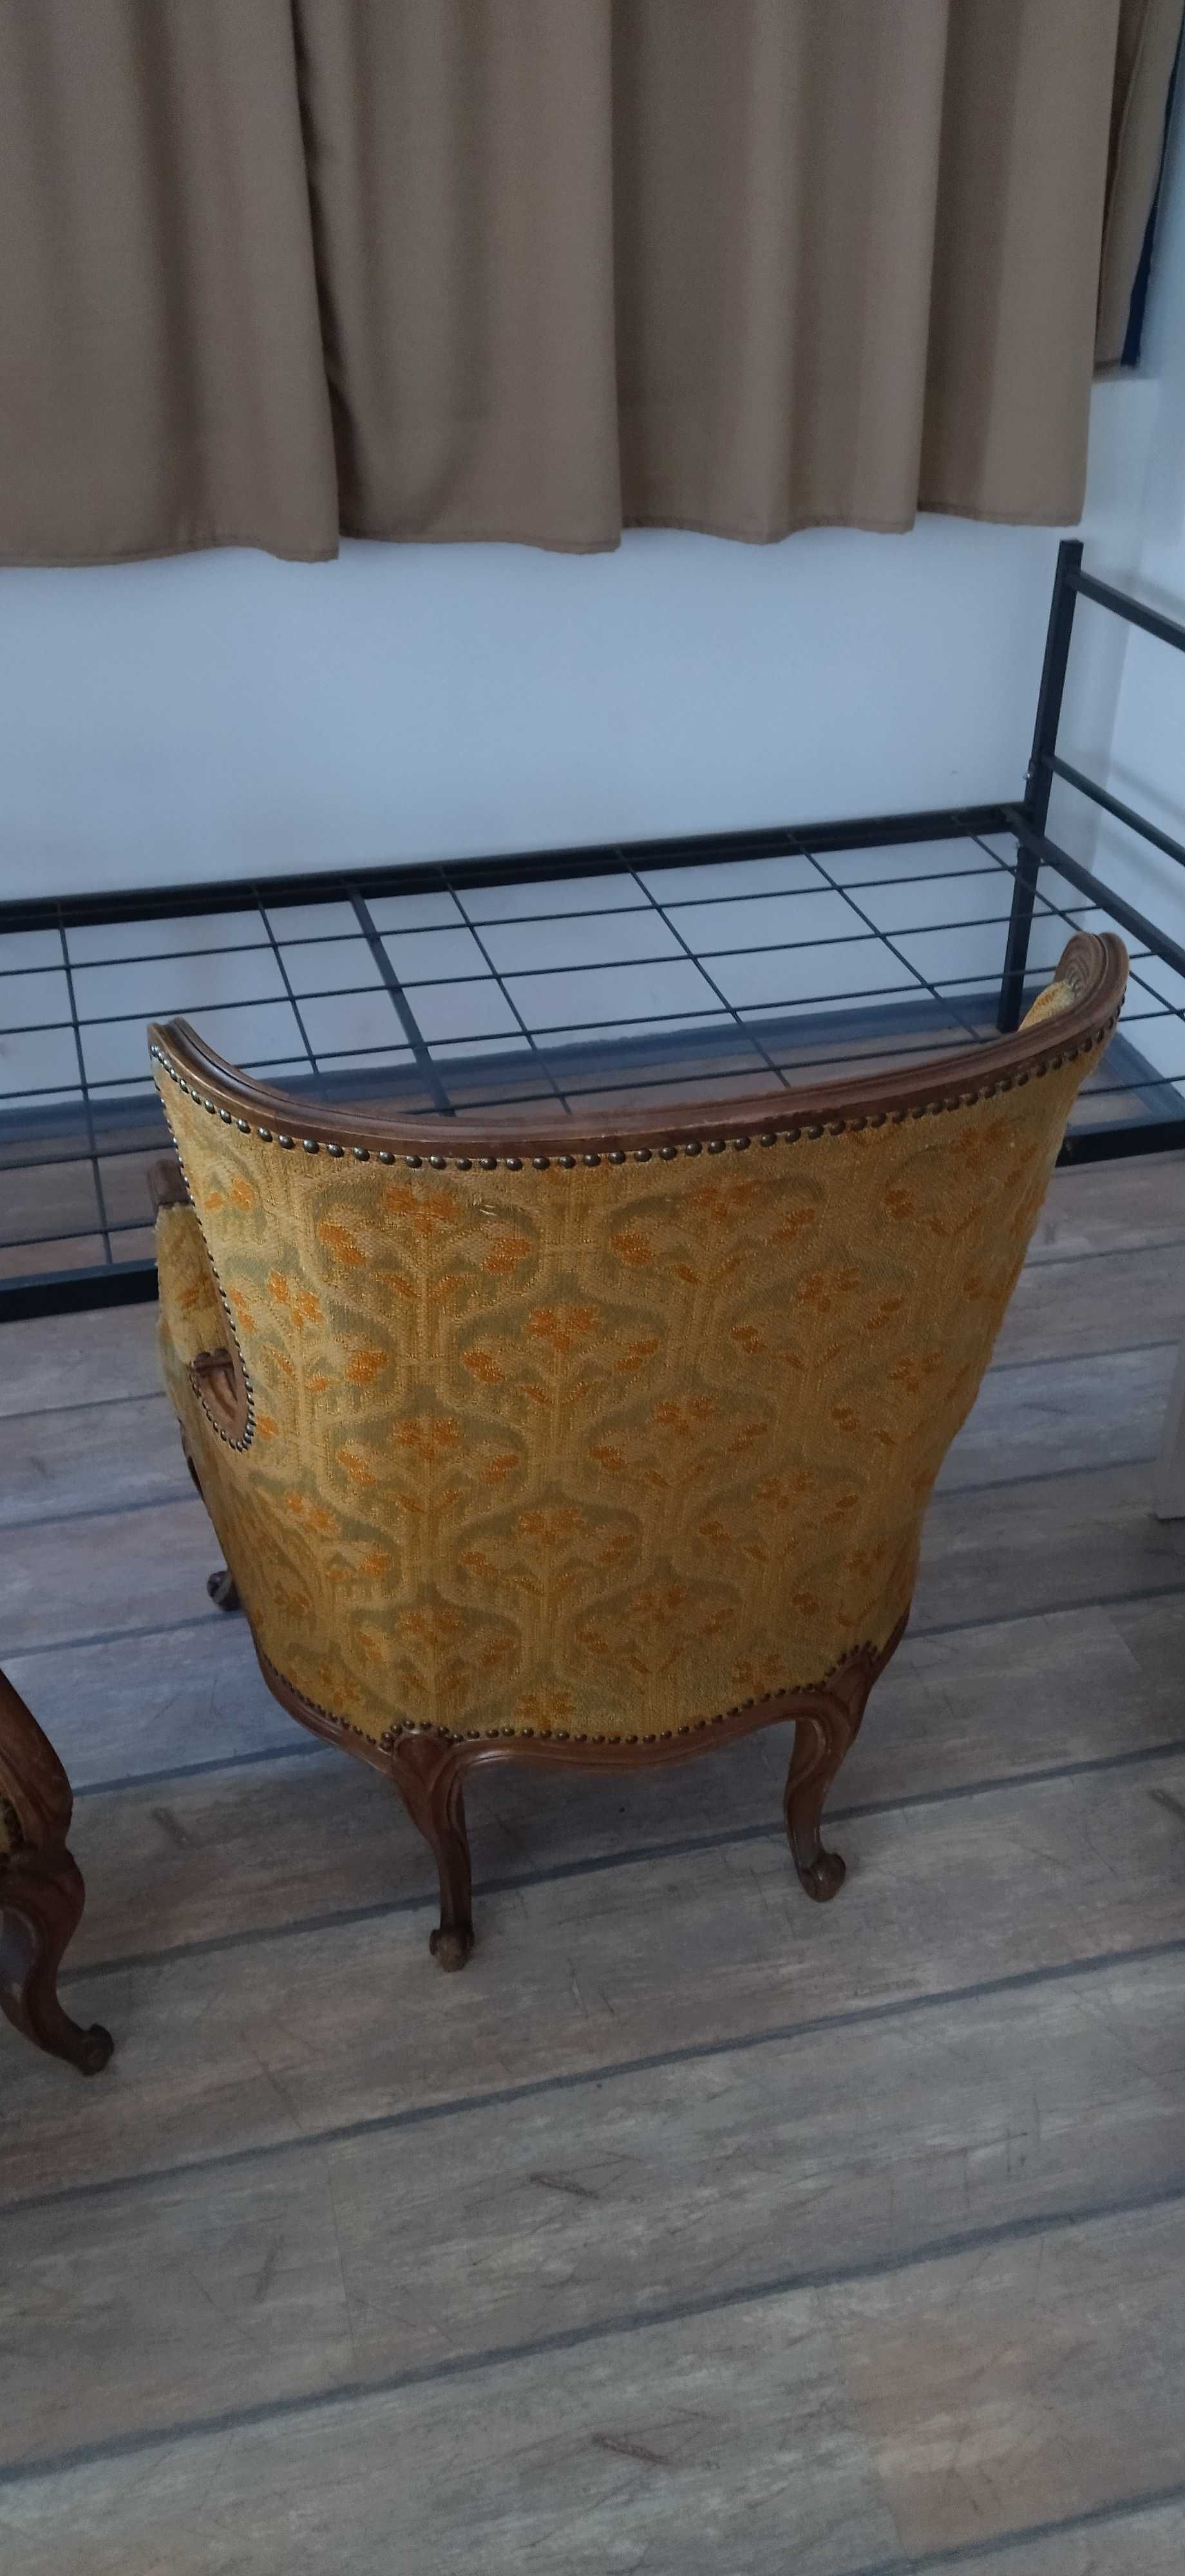 Антикварни испански кресла Orejeras